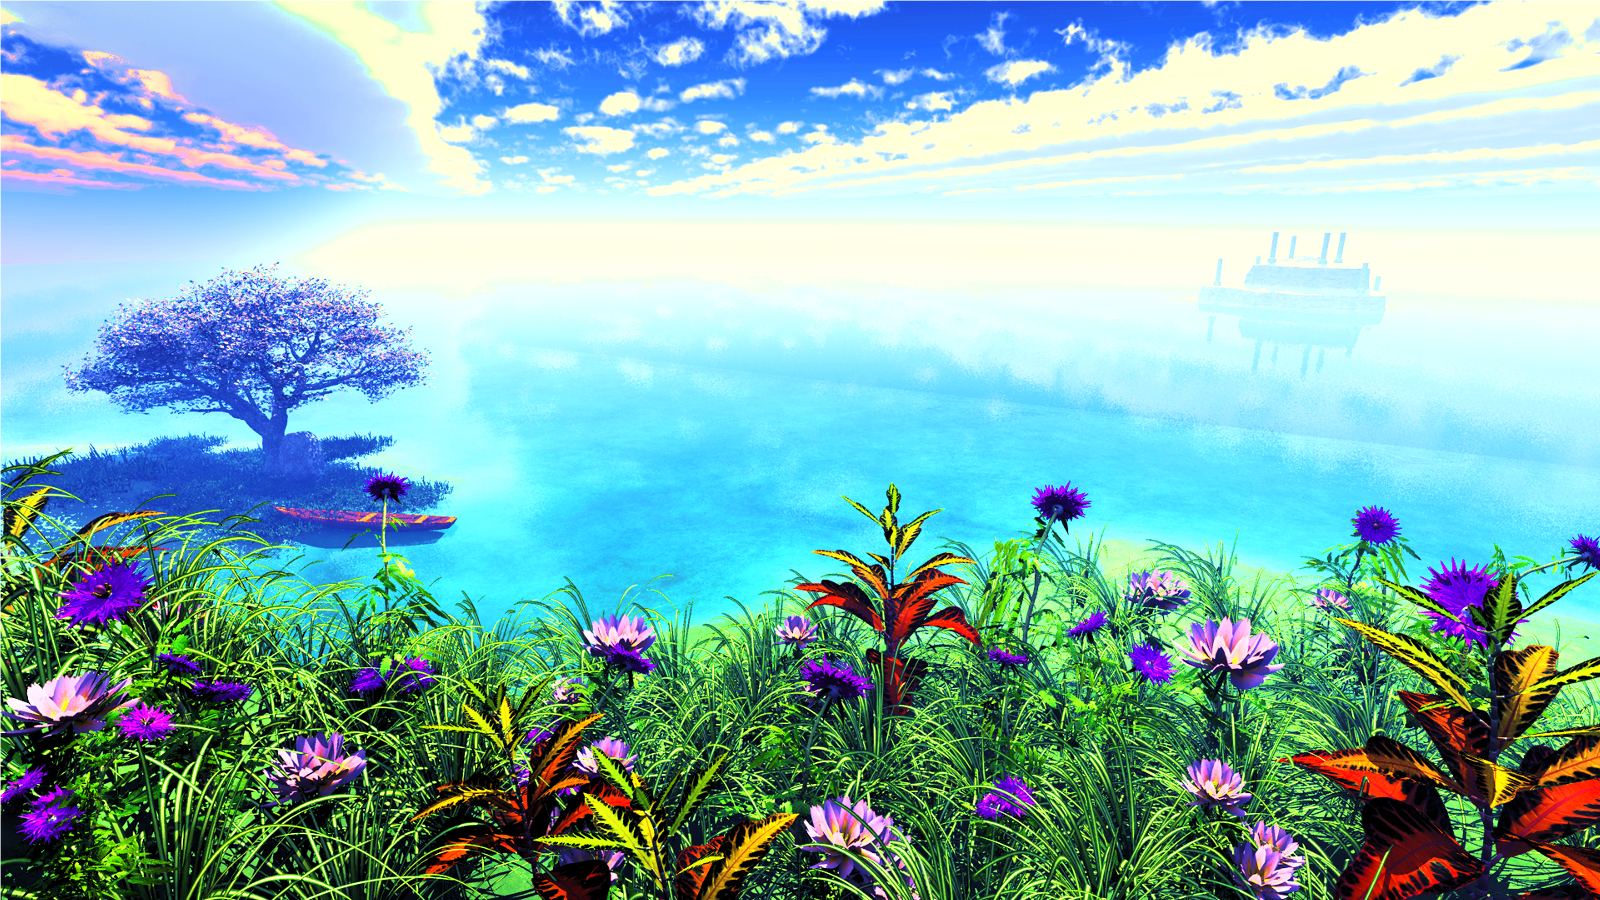 original, Boat, Clouds, Flowers, Grass, Landscape, Original, Scenic, Sky, Tree, Water, Y k Wallpaper